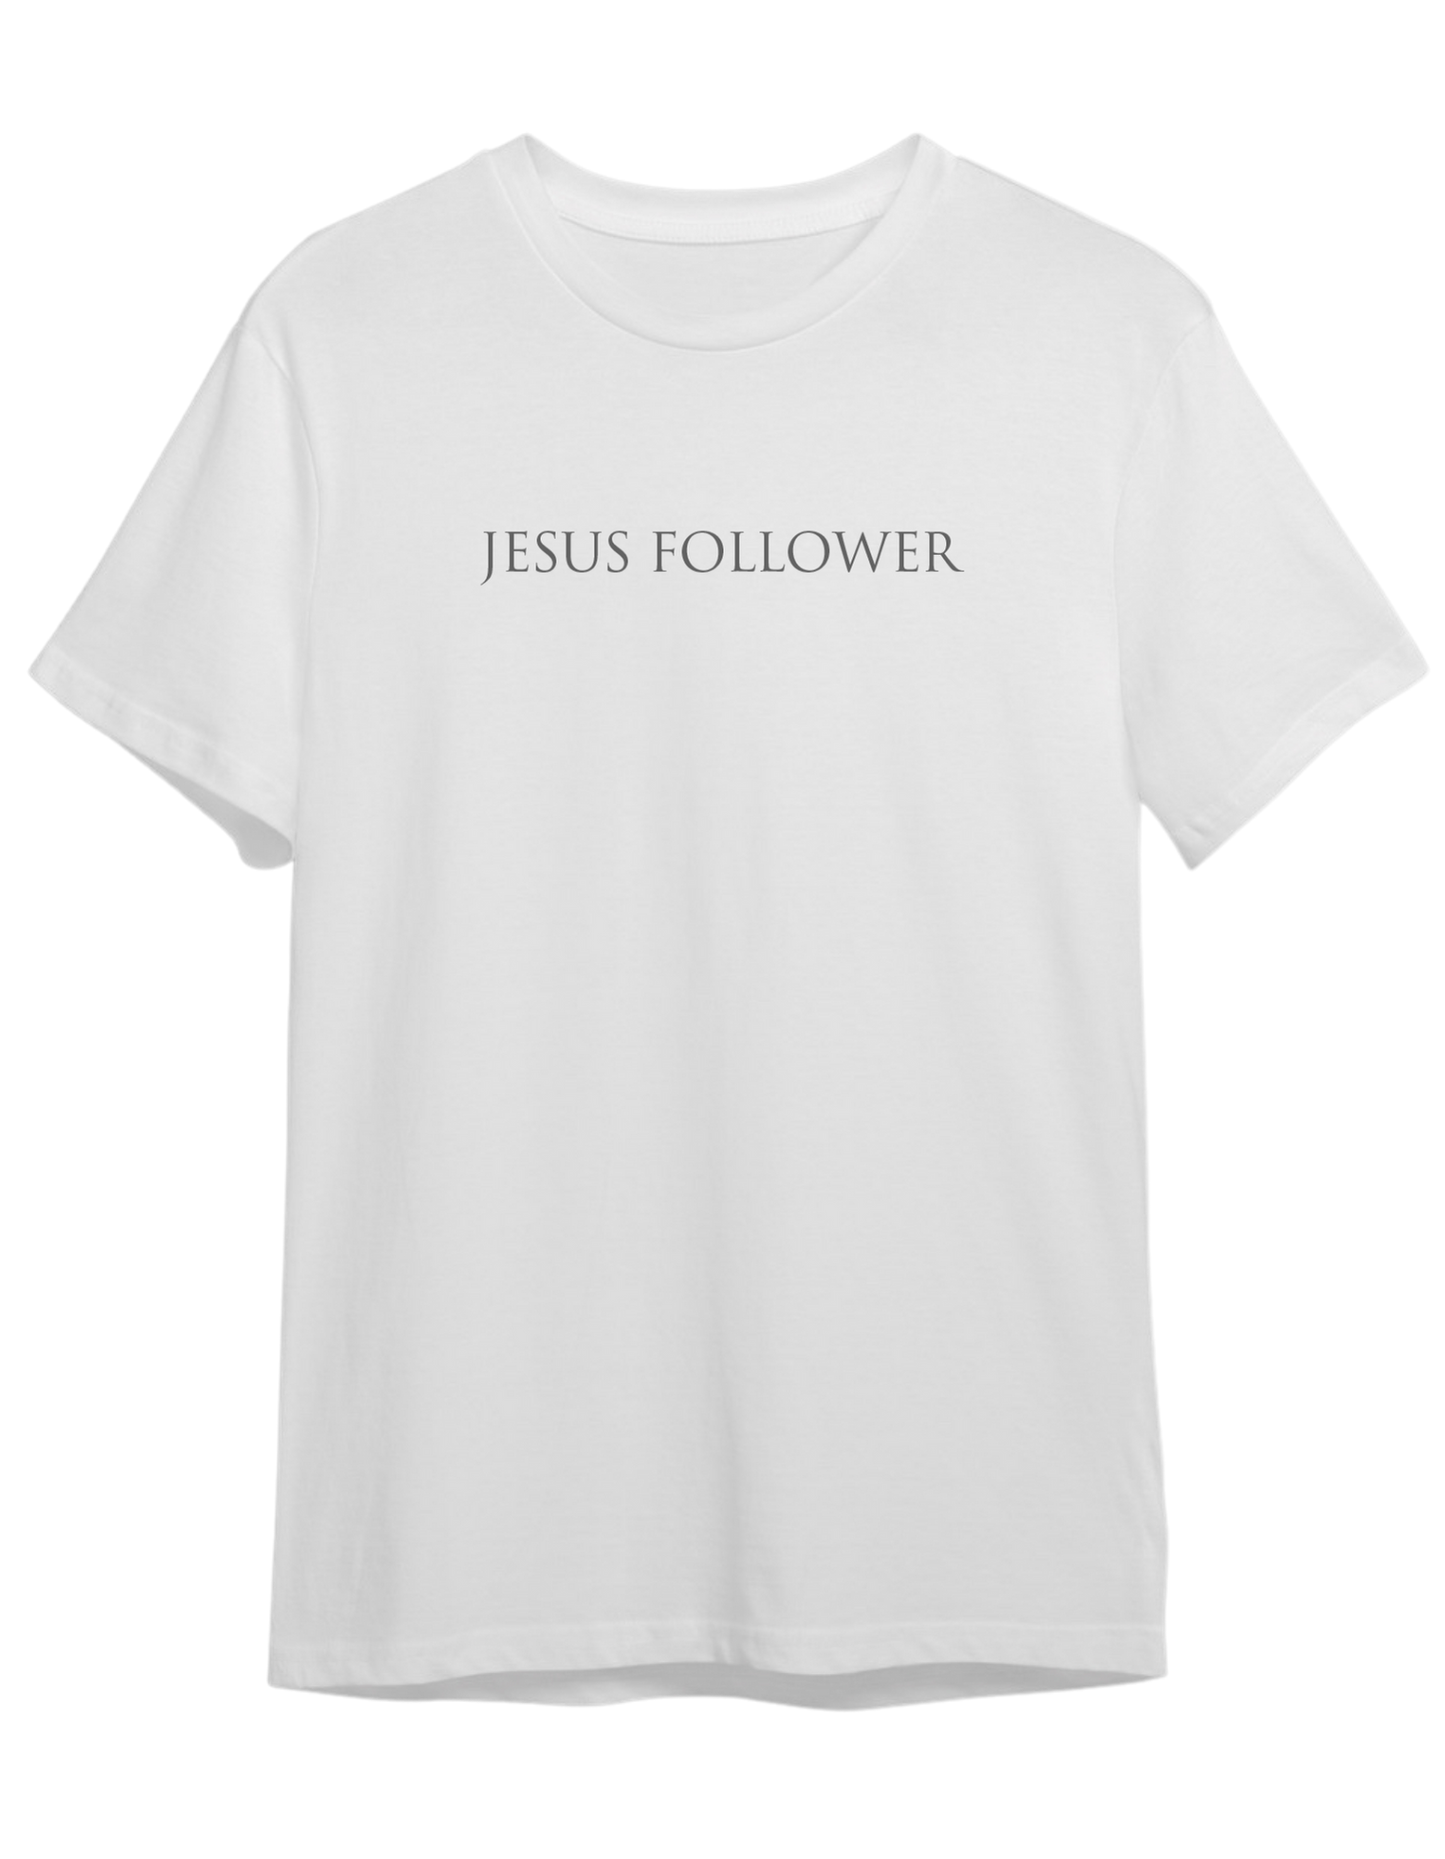 The Jesus Follower Tee